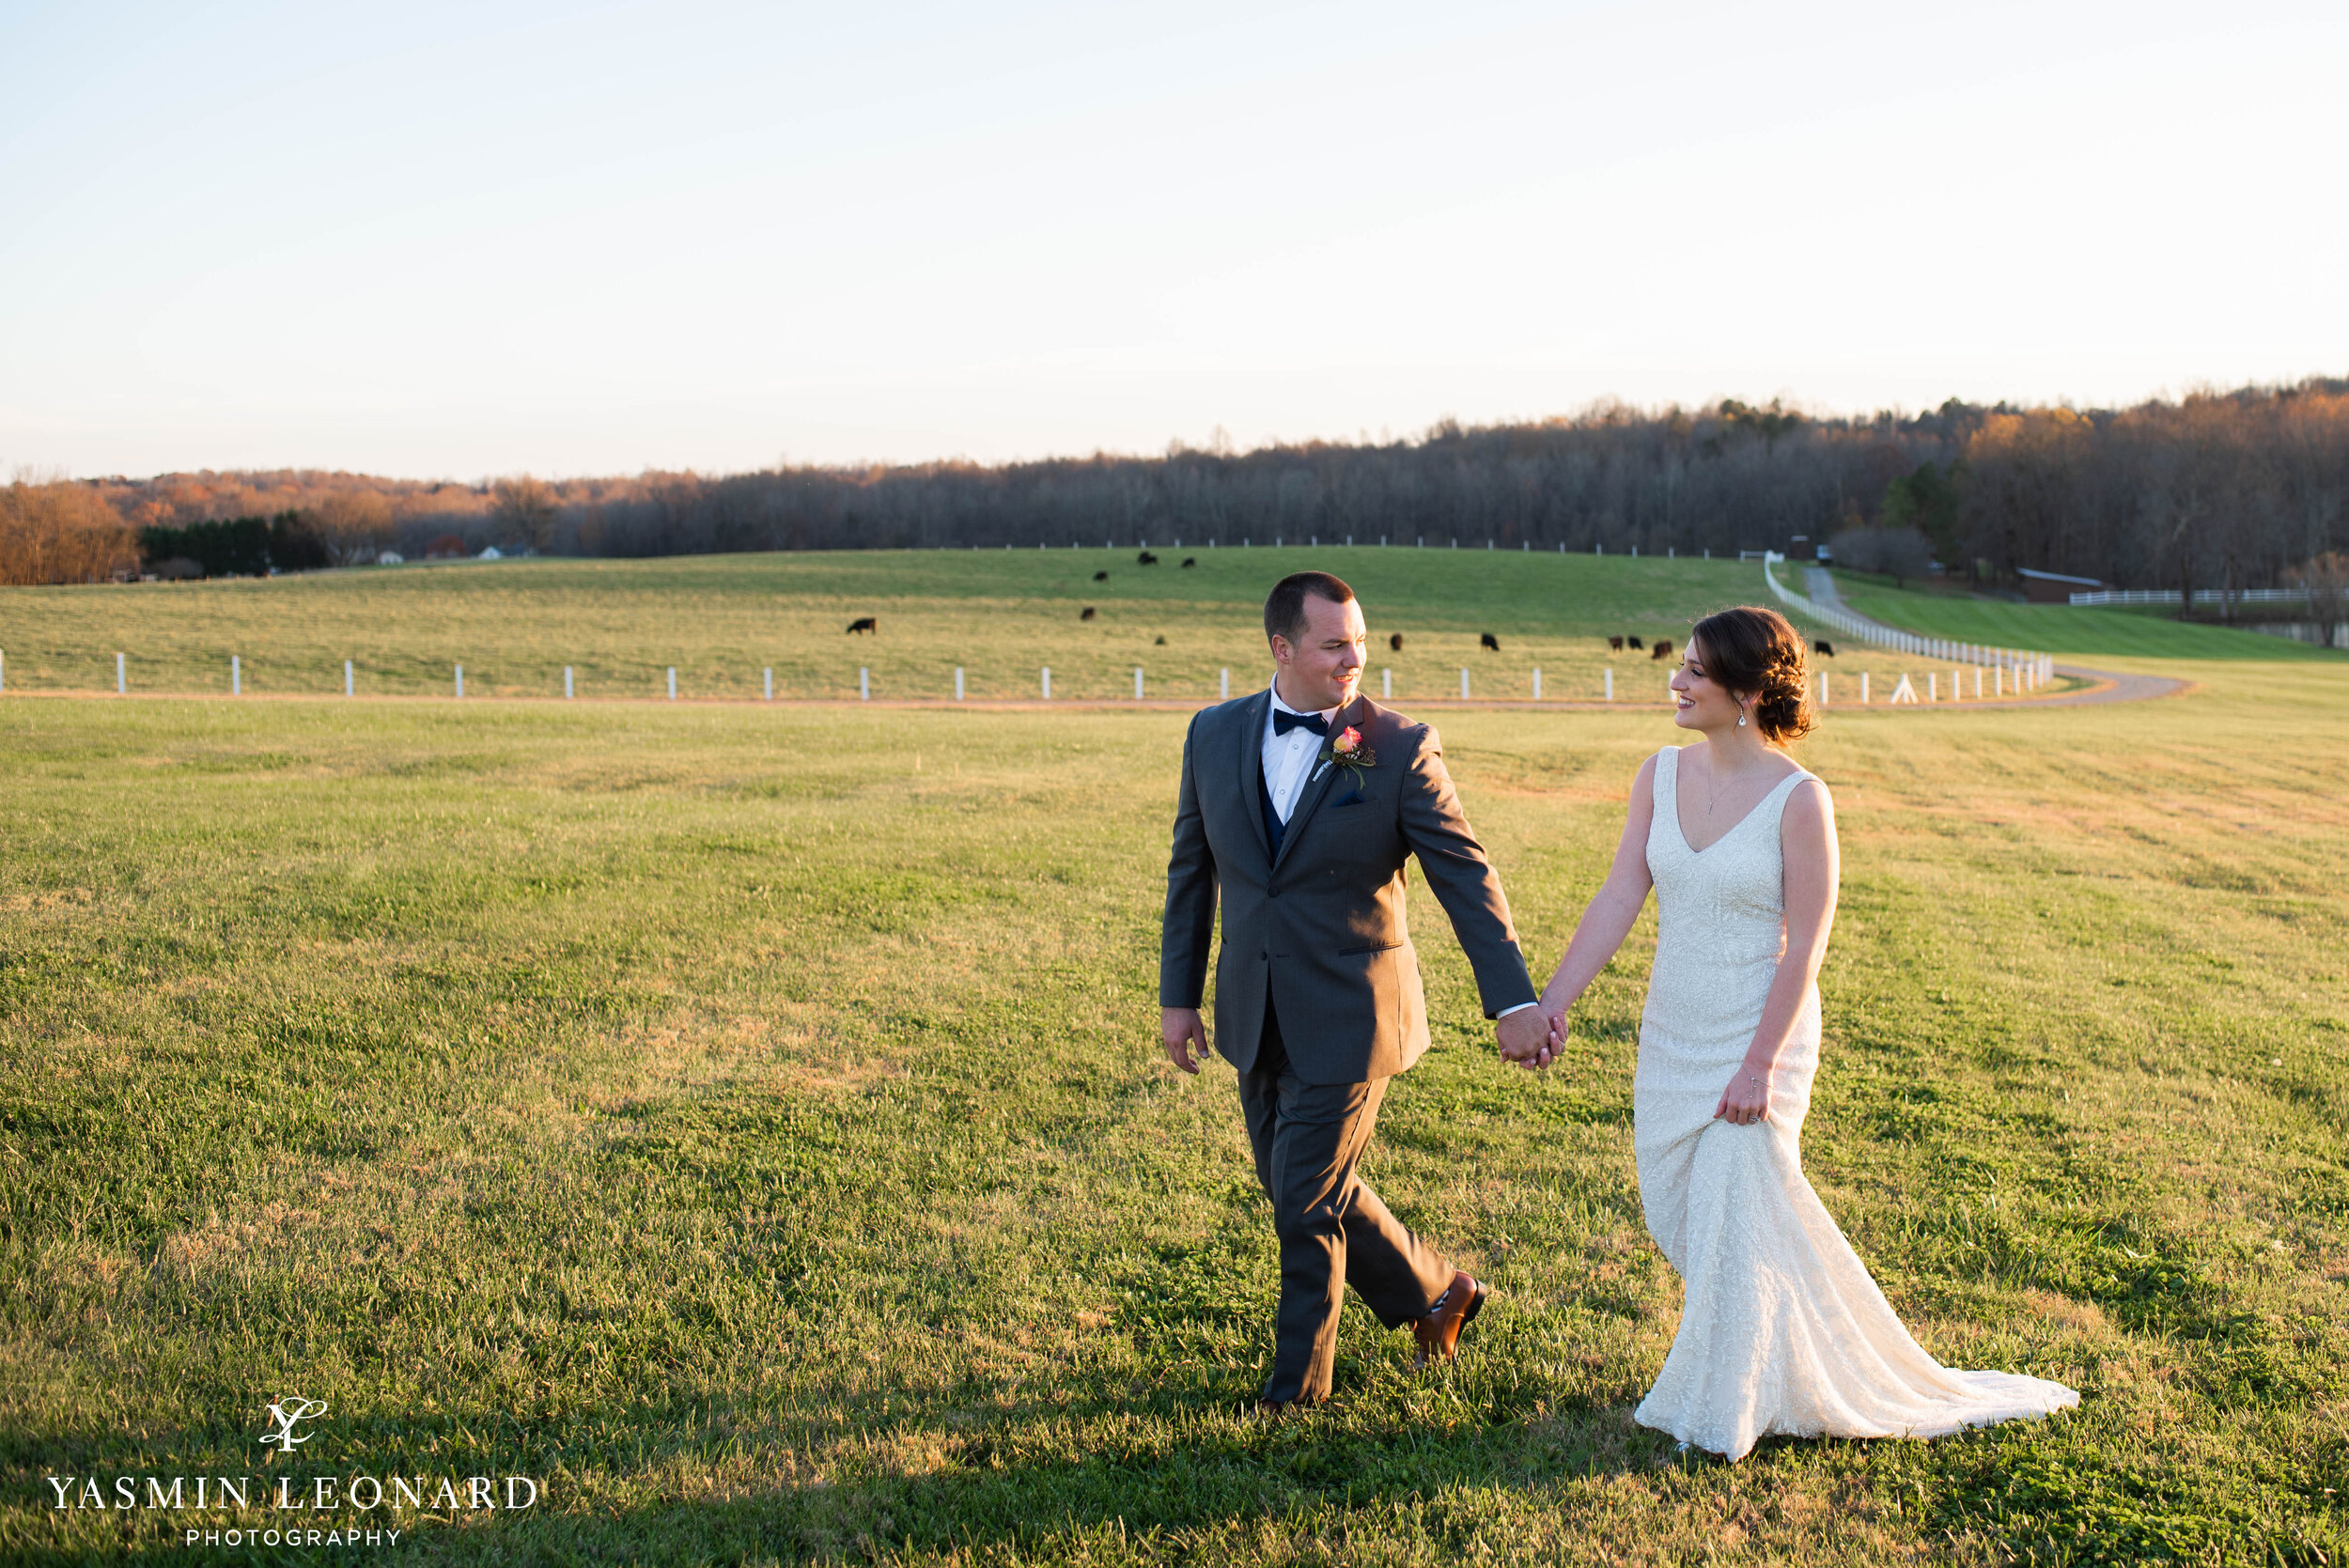 Jared and Katy - Adaumont Farms - High Point Weddings - NC Barn Weddings - Yasmin Leonard Photography-46.jpg